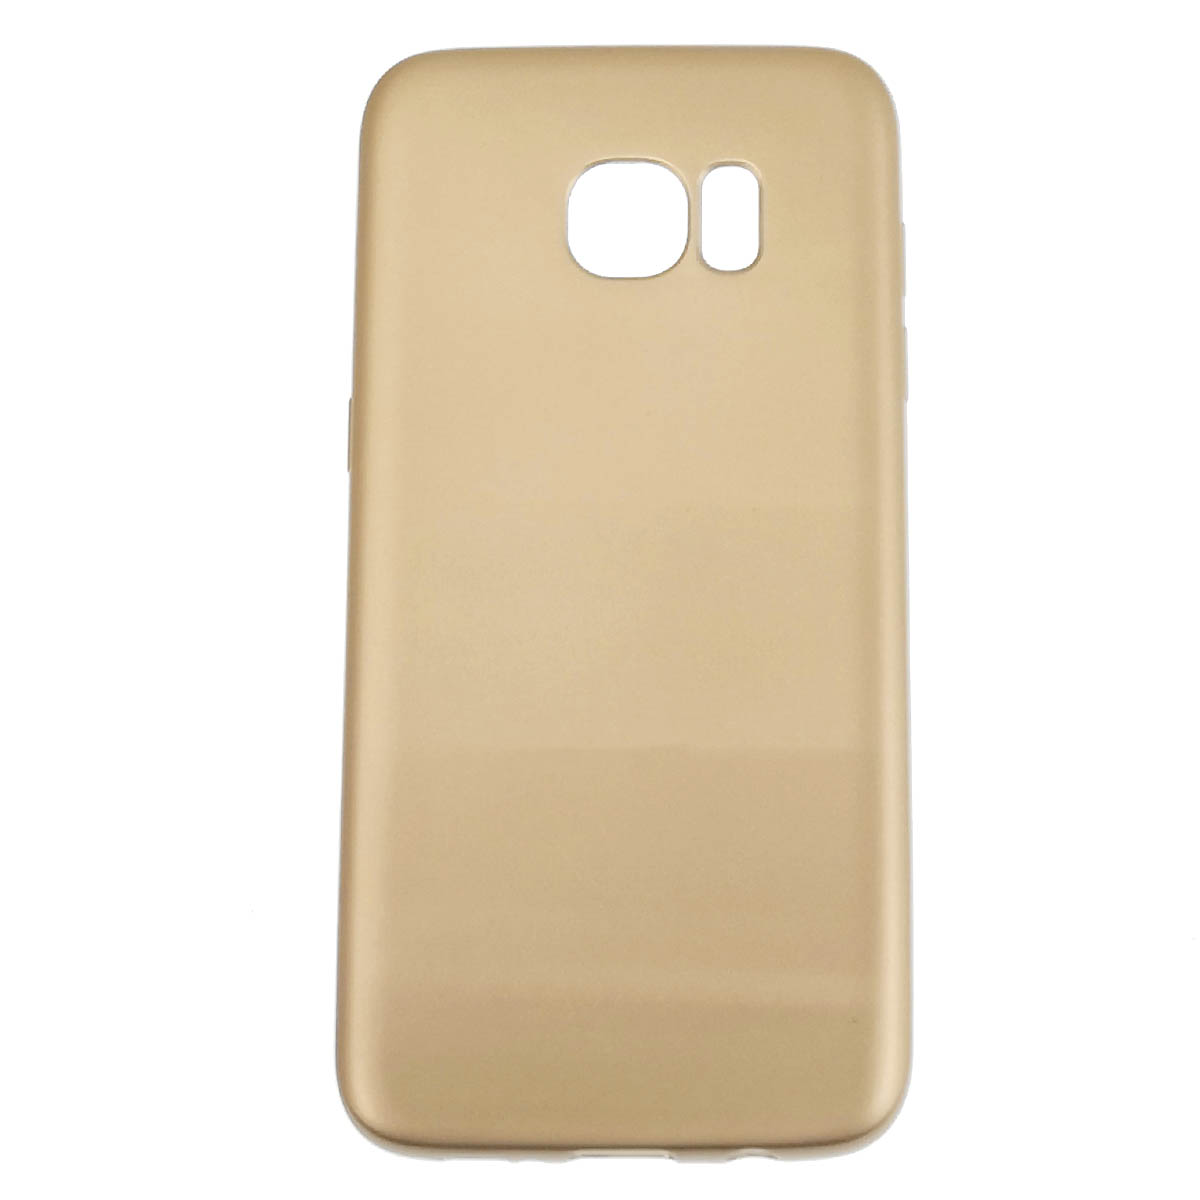 Чехол накладка J-Case THIN для SAMSUNG Galaxy S7 Edge, силикон, цвет золотистый